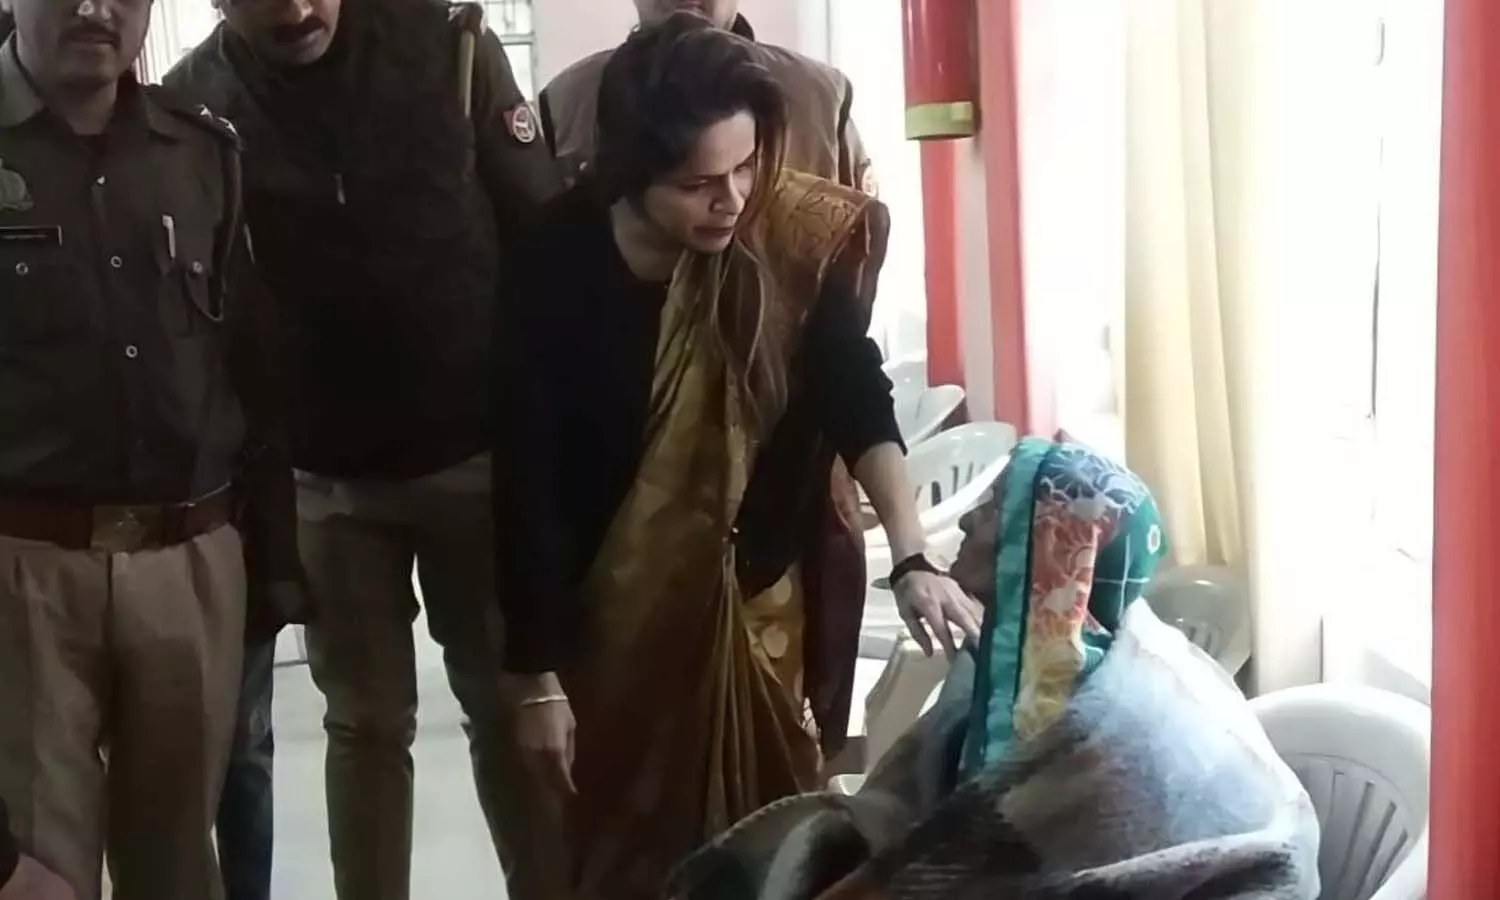 SDM Swati Shukla herself reached to the elderly woman during Sampurna Samadhan Divas